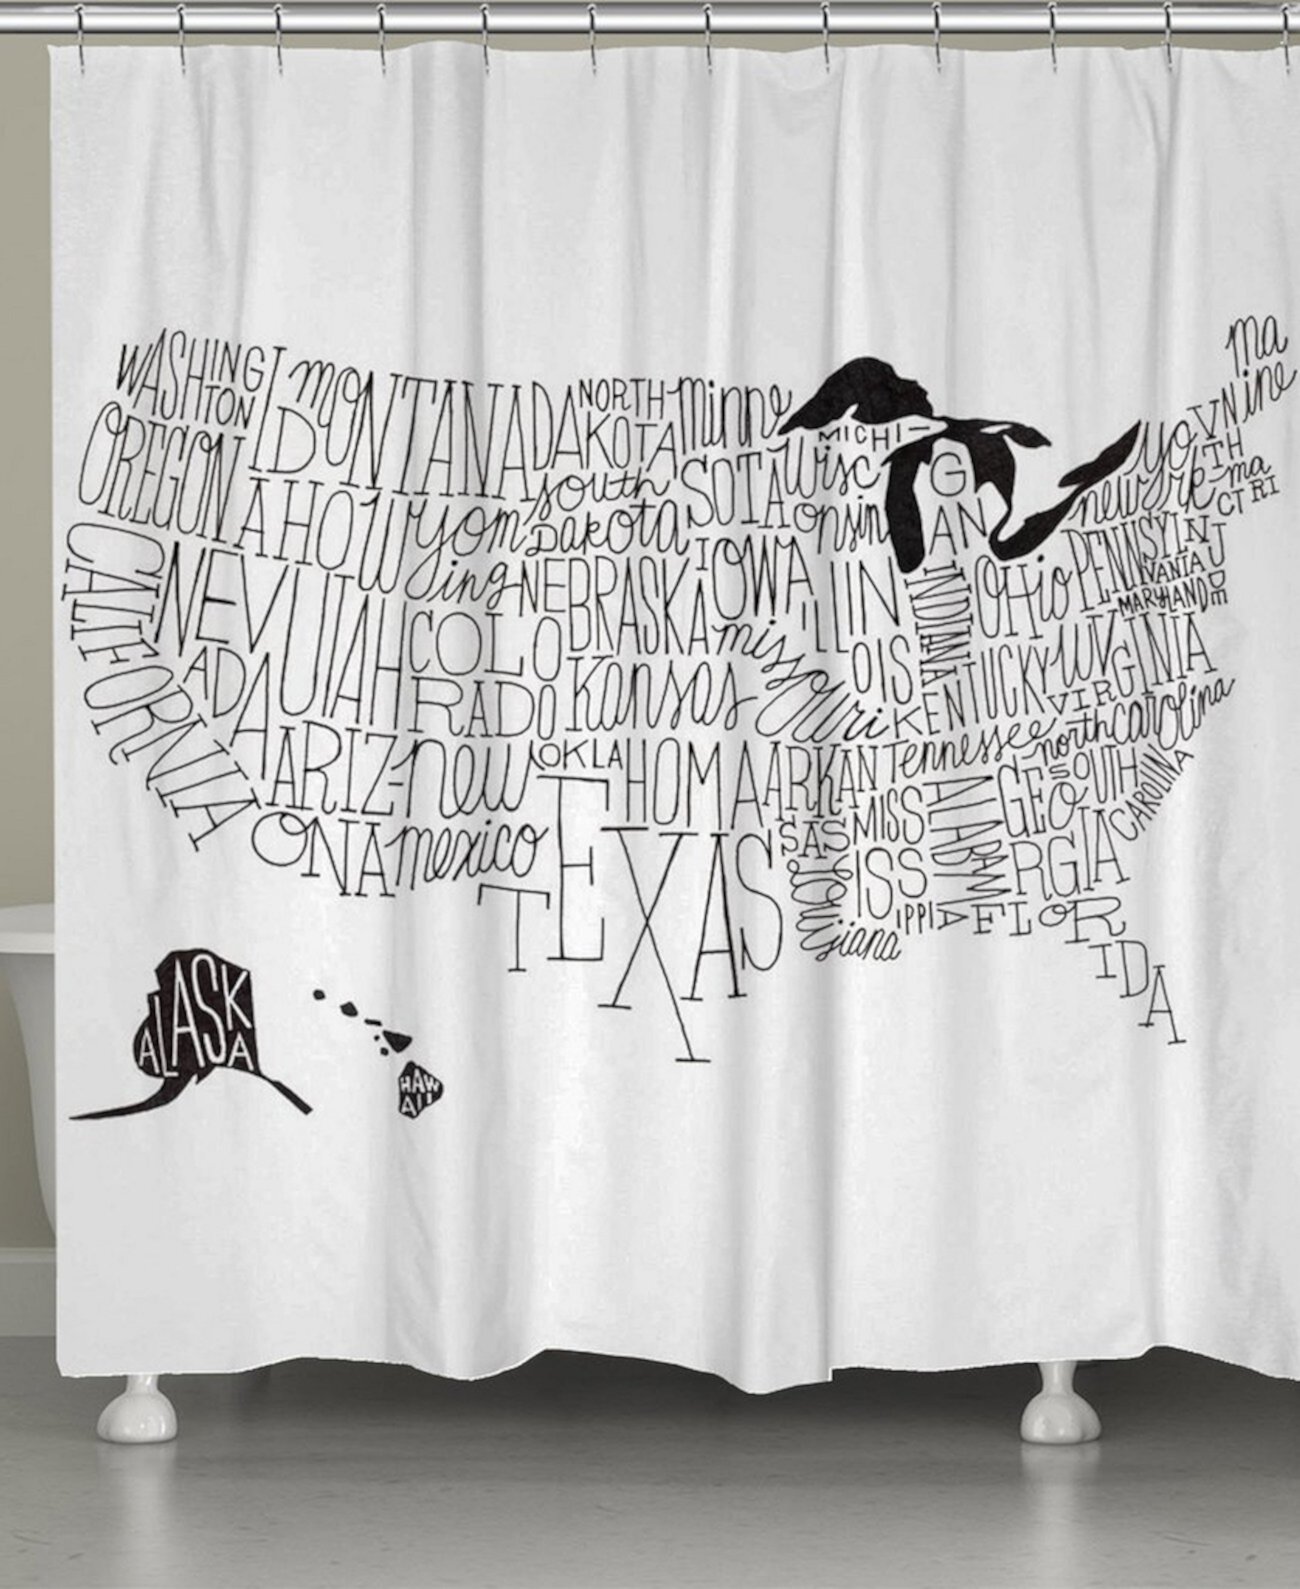 Занавеска для душа с надписью на карте США Laural Home